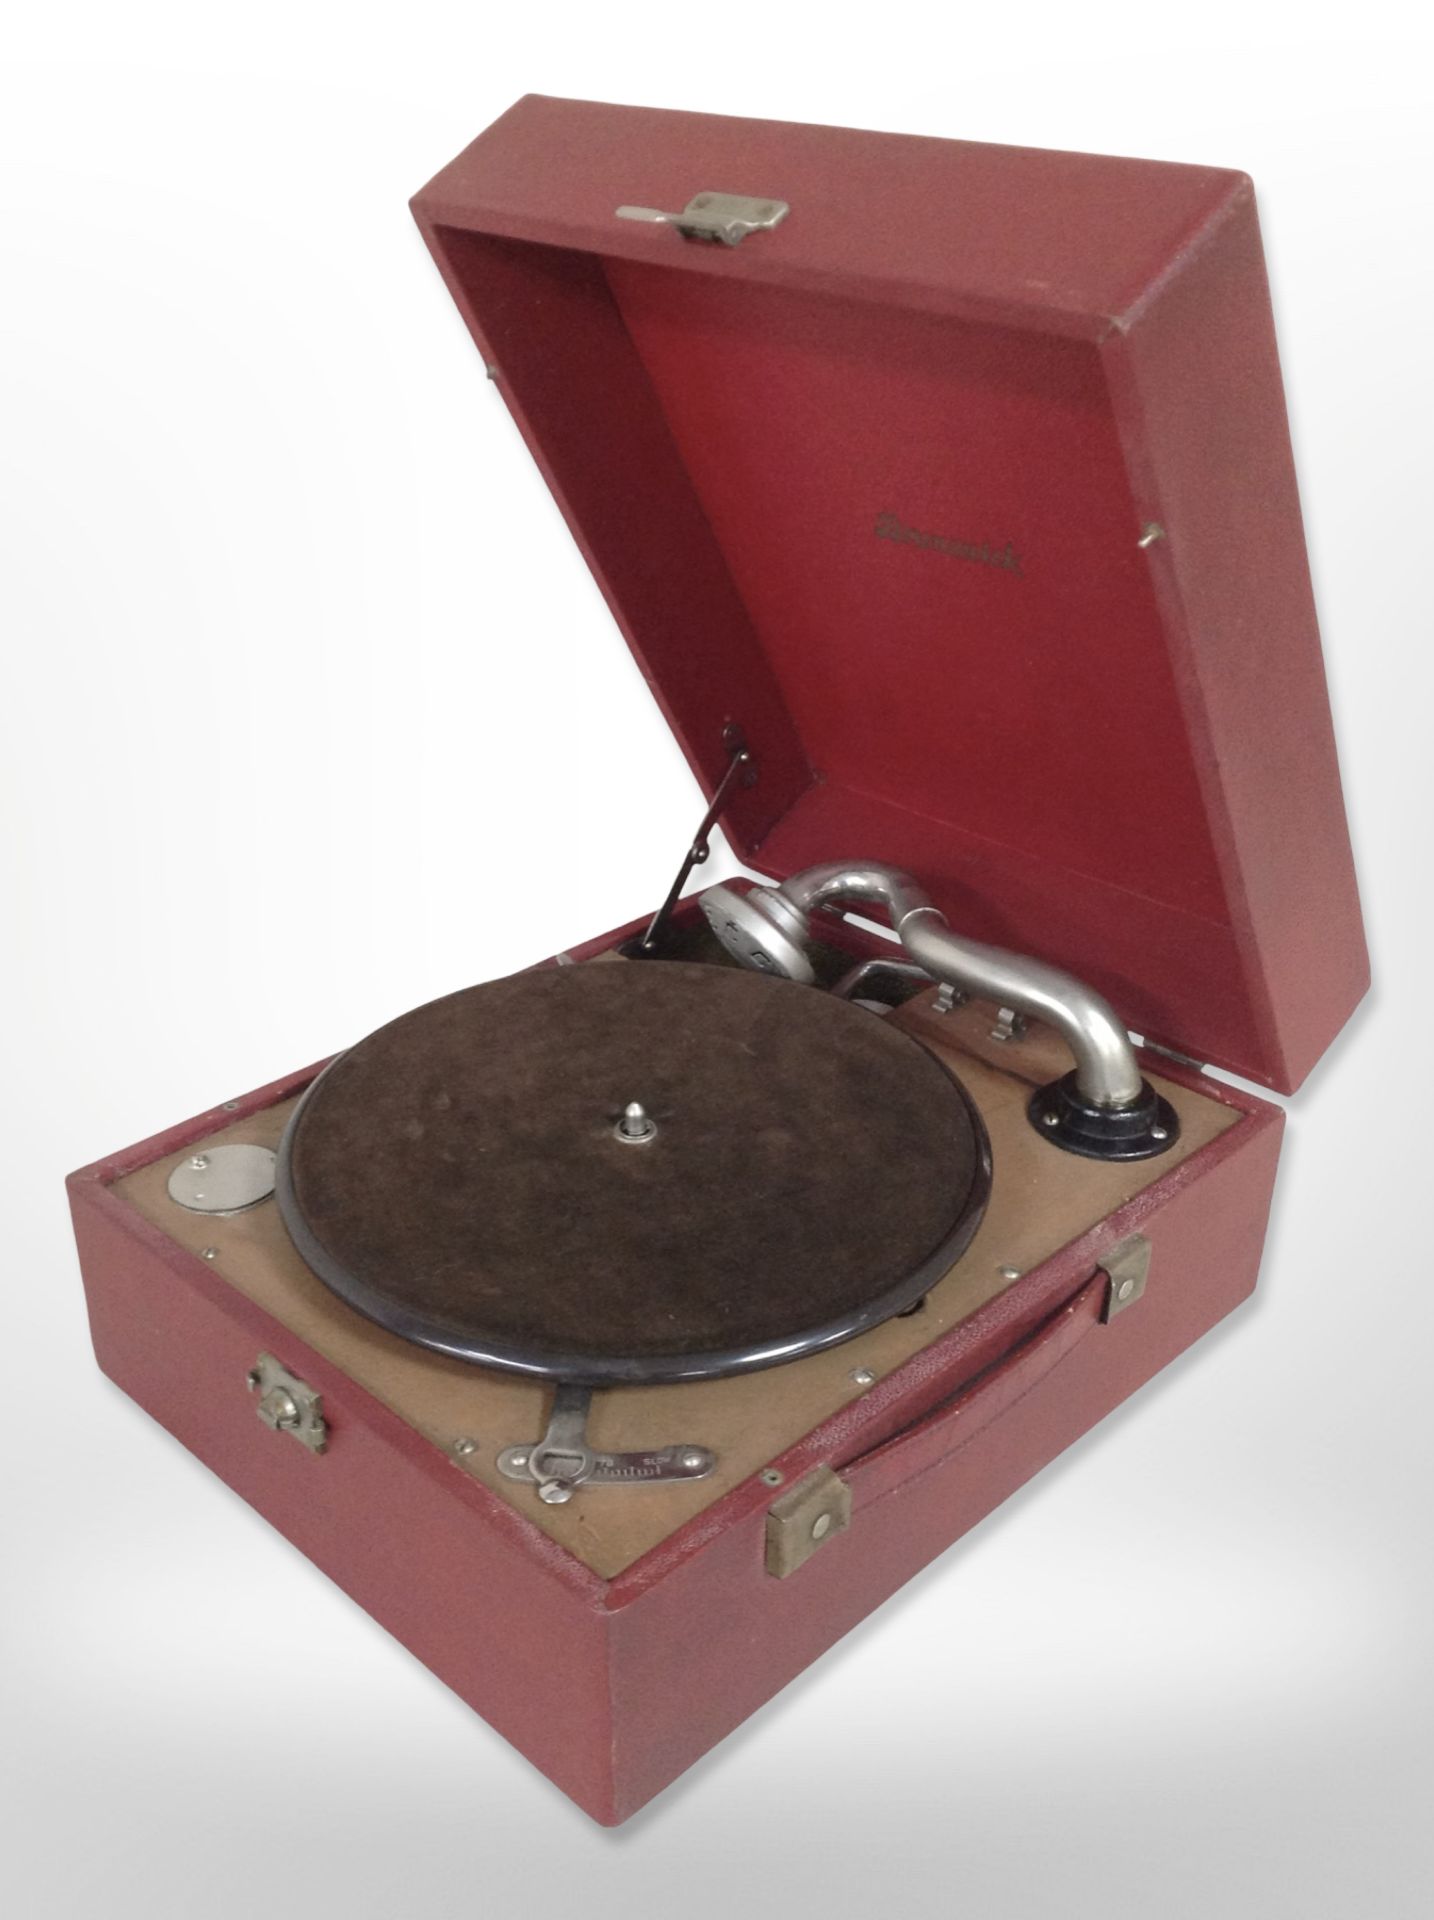 A Brunswick portable record player.